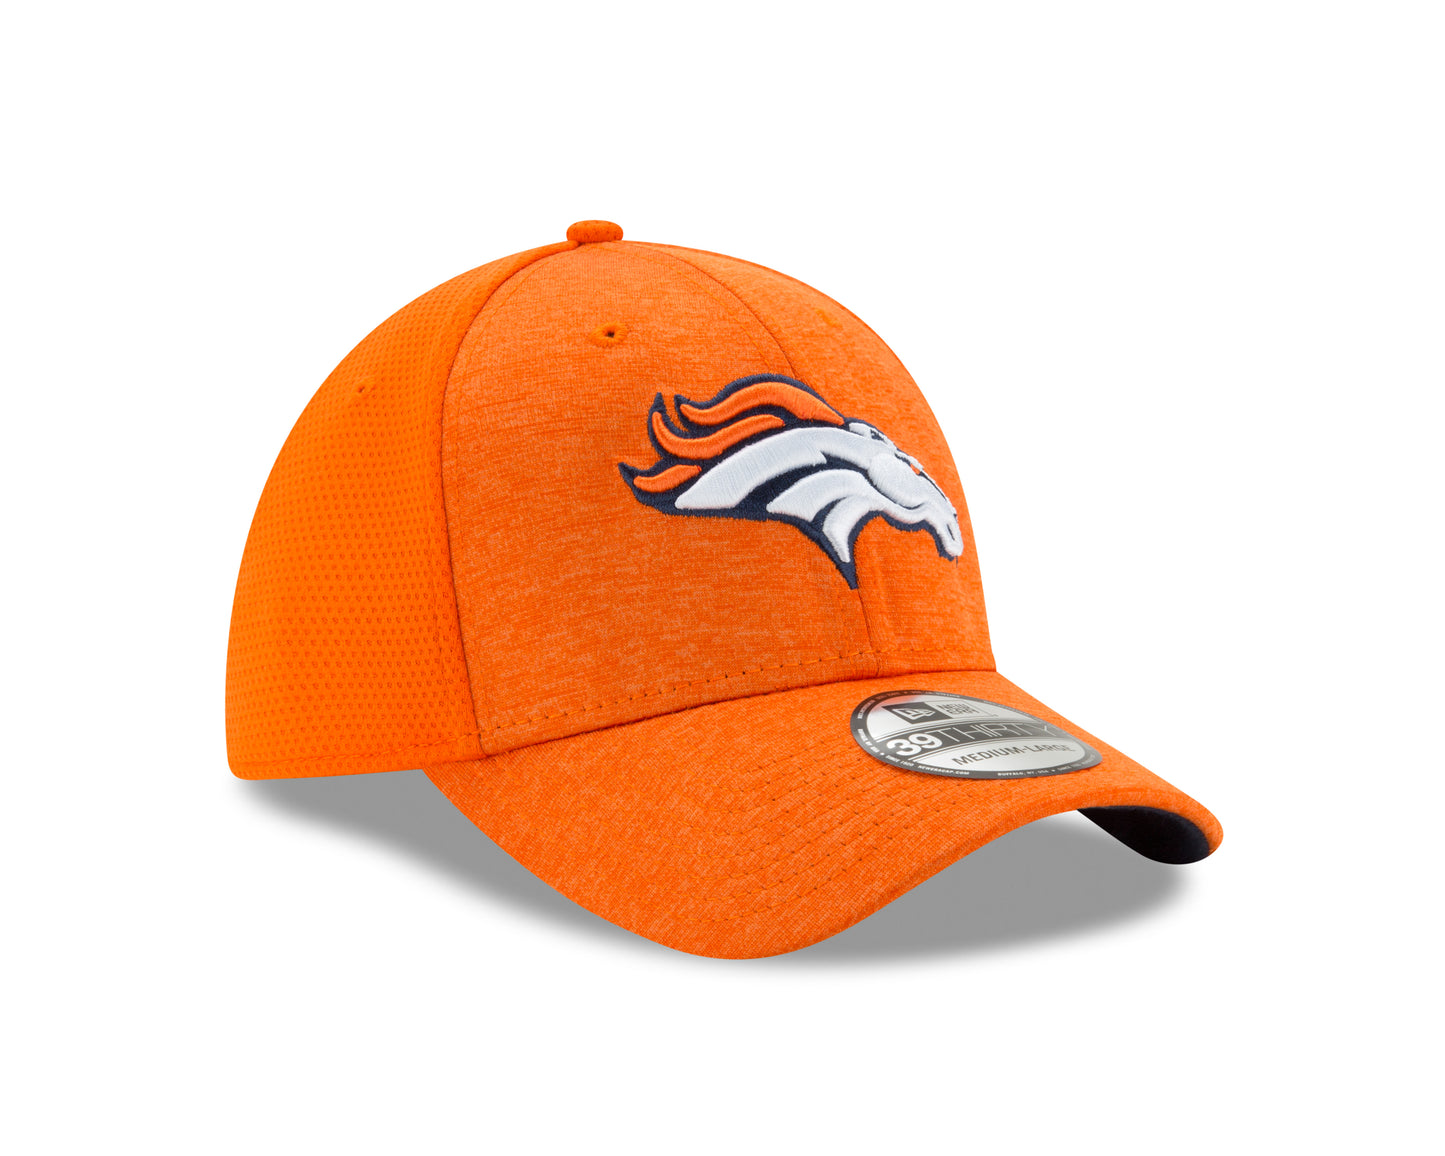 Denver Broncos New Era Shadowed Team 39THIRTY Flex Hat - Orange